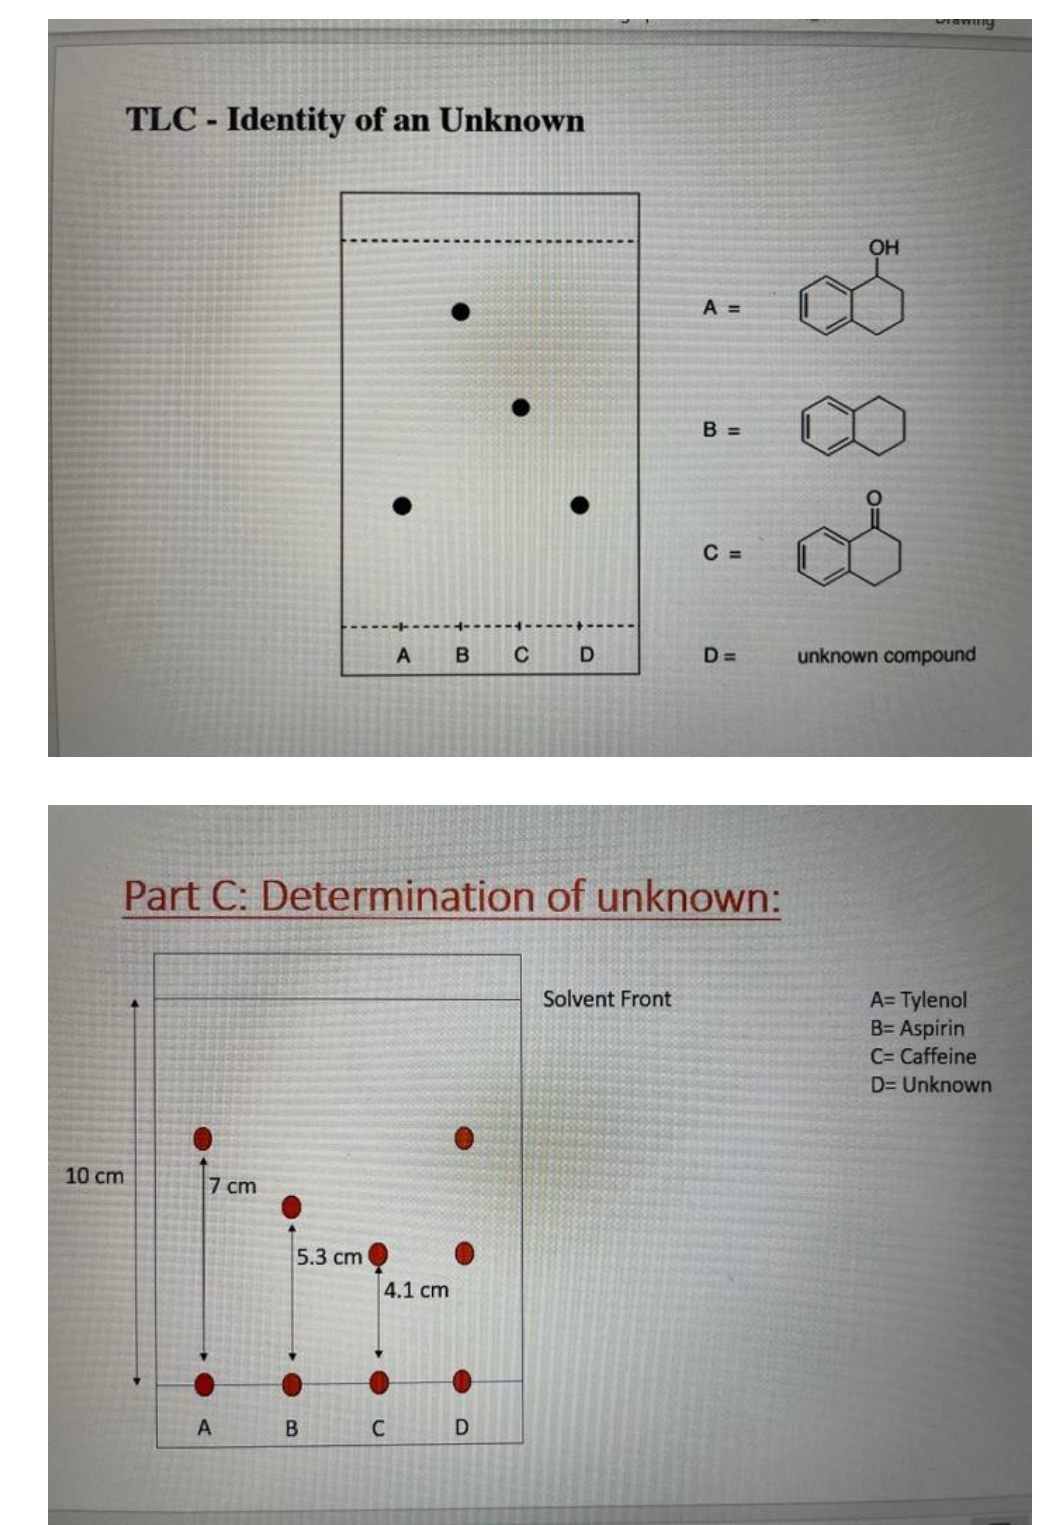 TLC - Identity of an Unknown
10 cm
7 cm
A
5.3 cm
B
A
Part C: Determination of unknown:
4.1 cm
C
B CD
A =
Solvent Front
B =
C =
OH
Drawing
D= unknown compound
A=Tylenol
B= Aspirin
C= Caffeine
D= Unknown